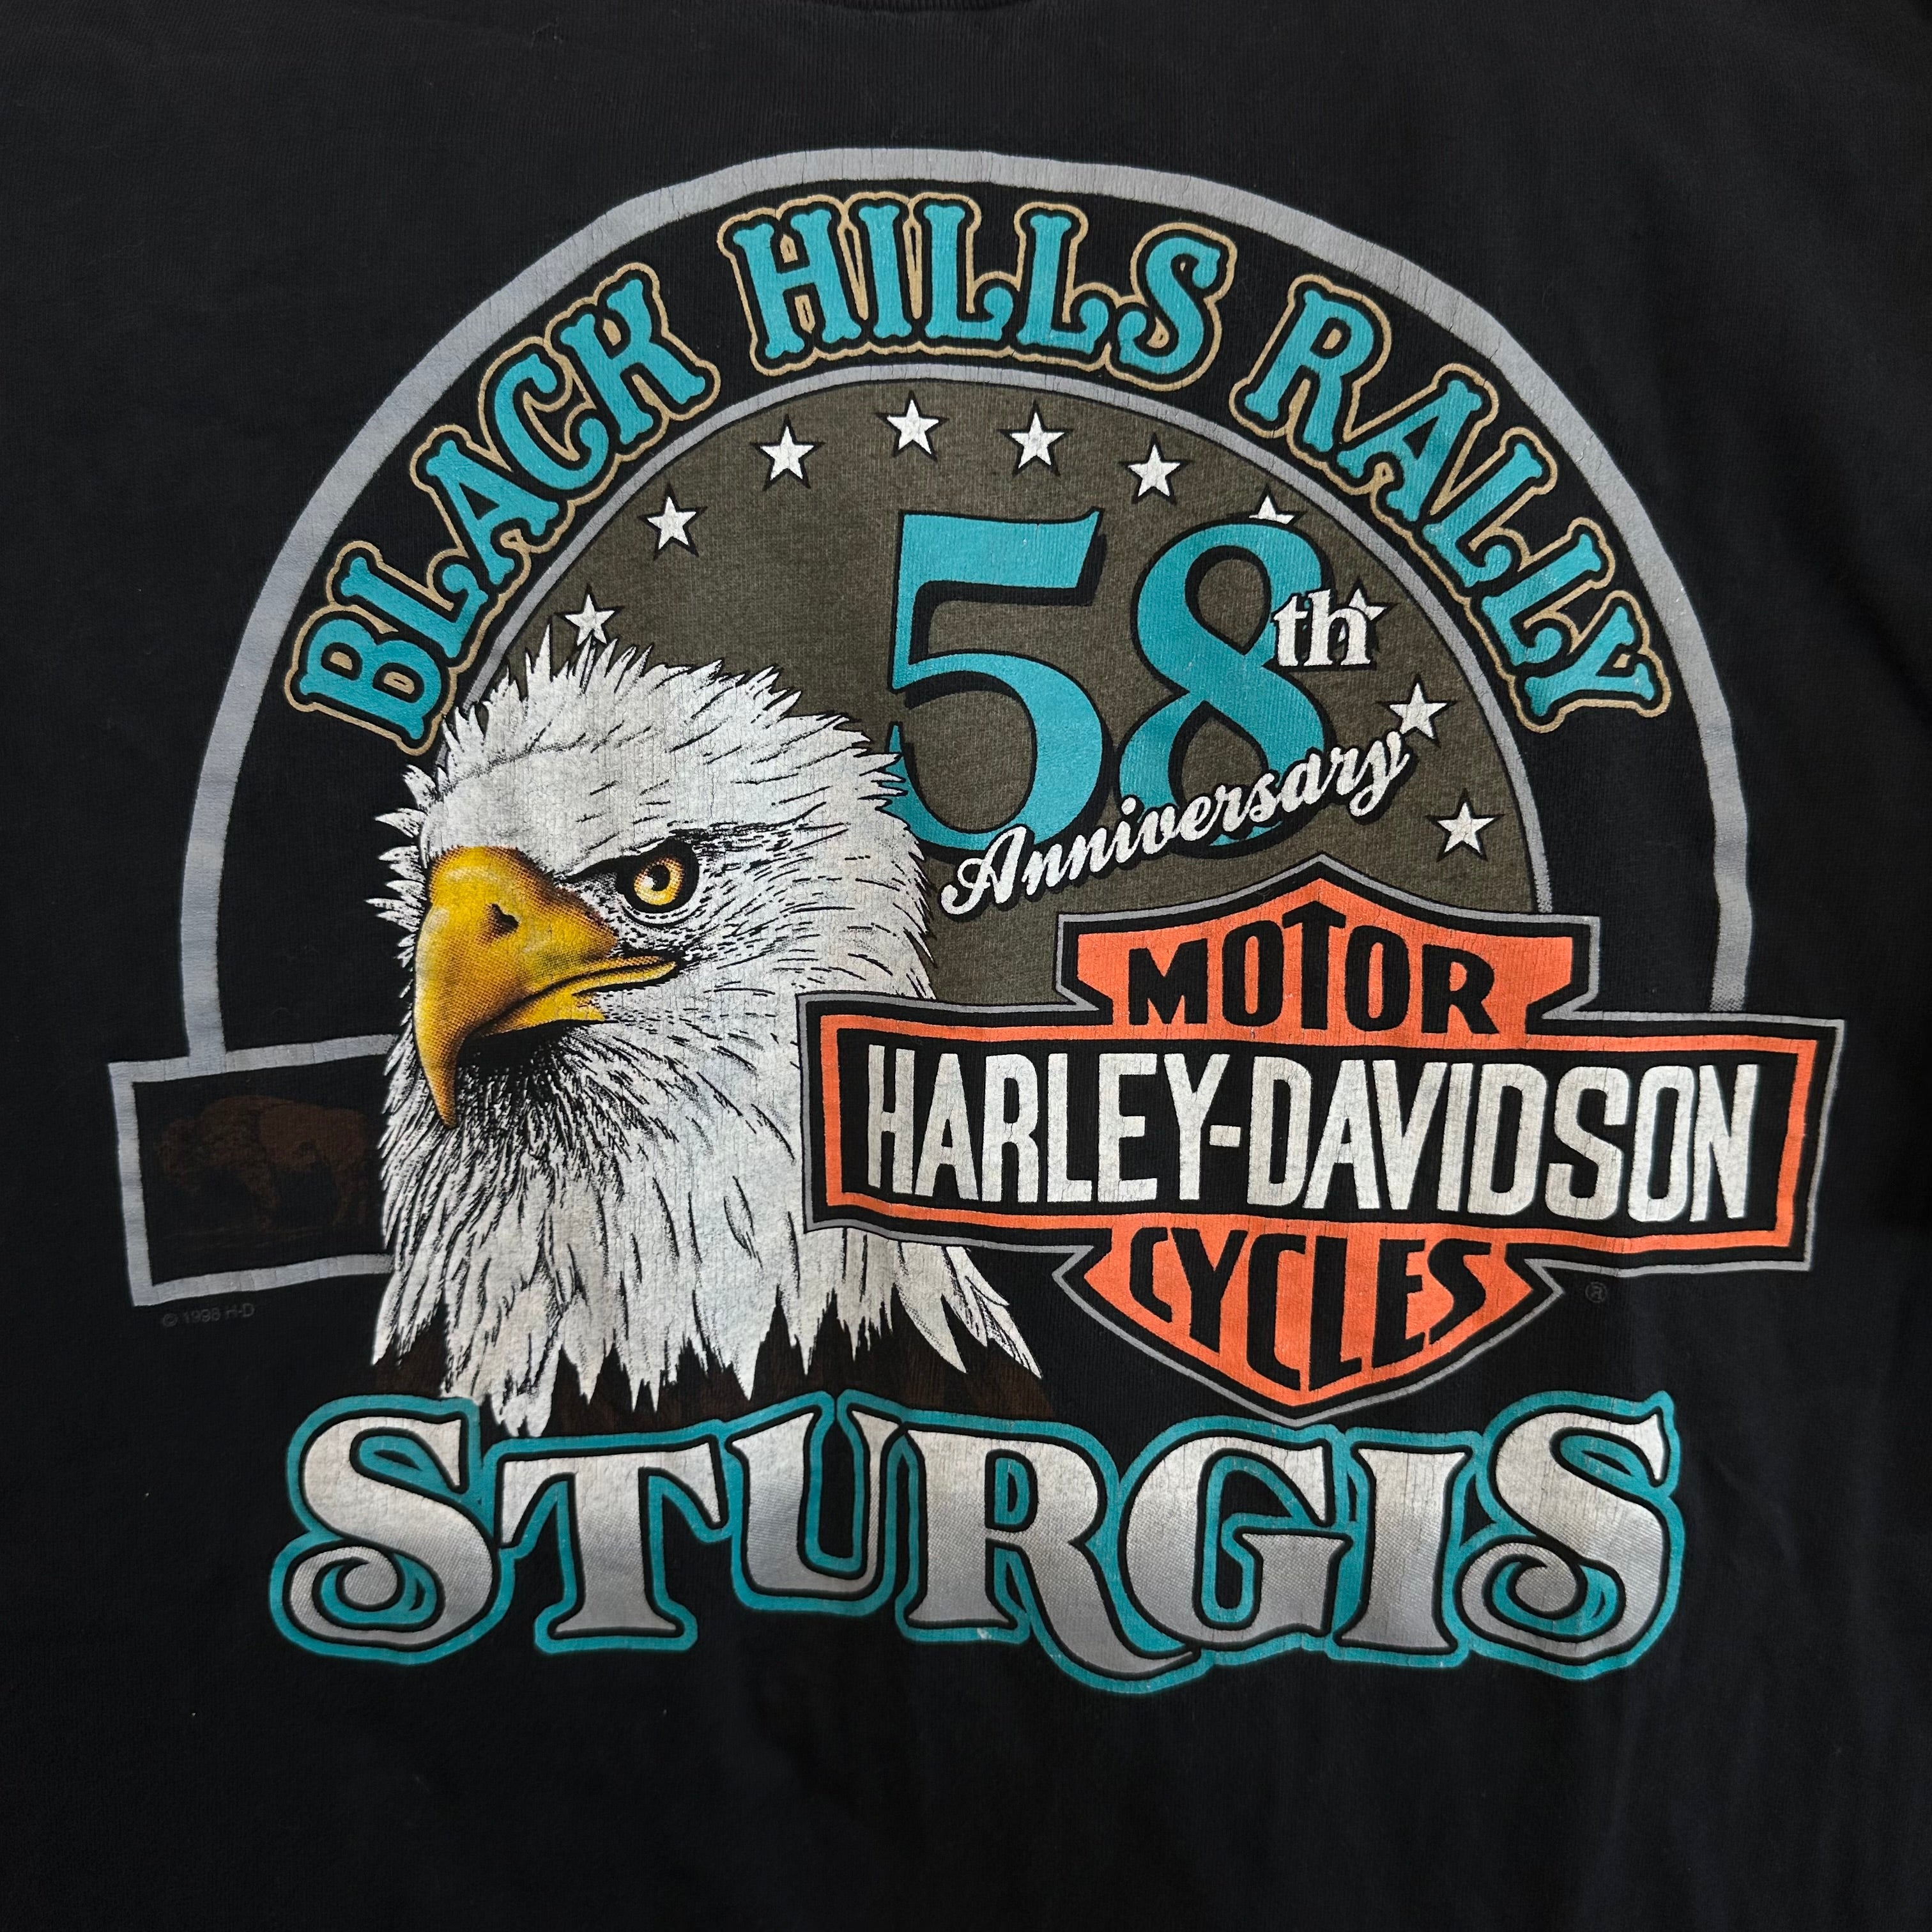 Harley Davidson 58th Annual Sturgis T-Shirt